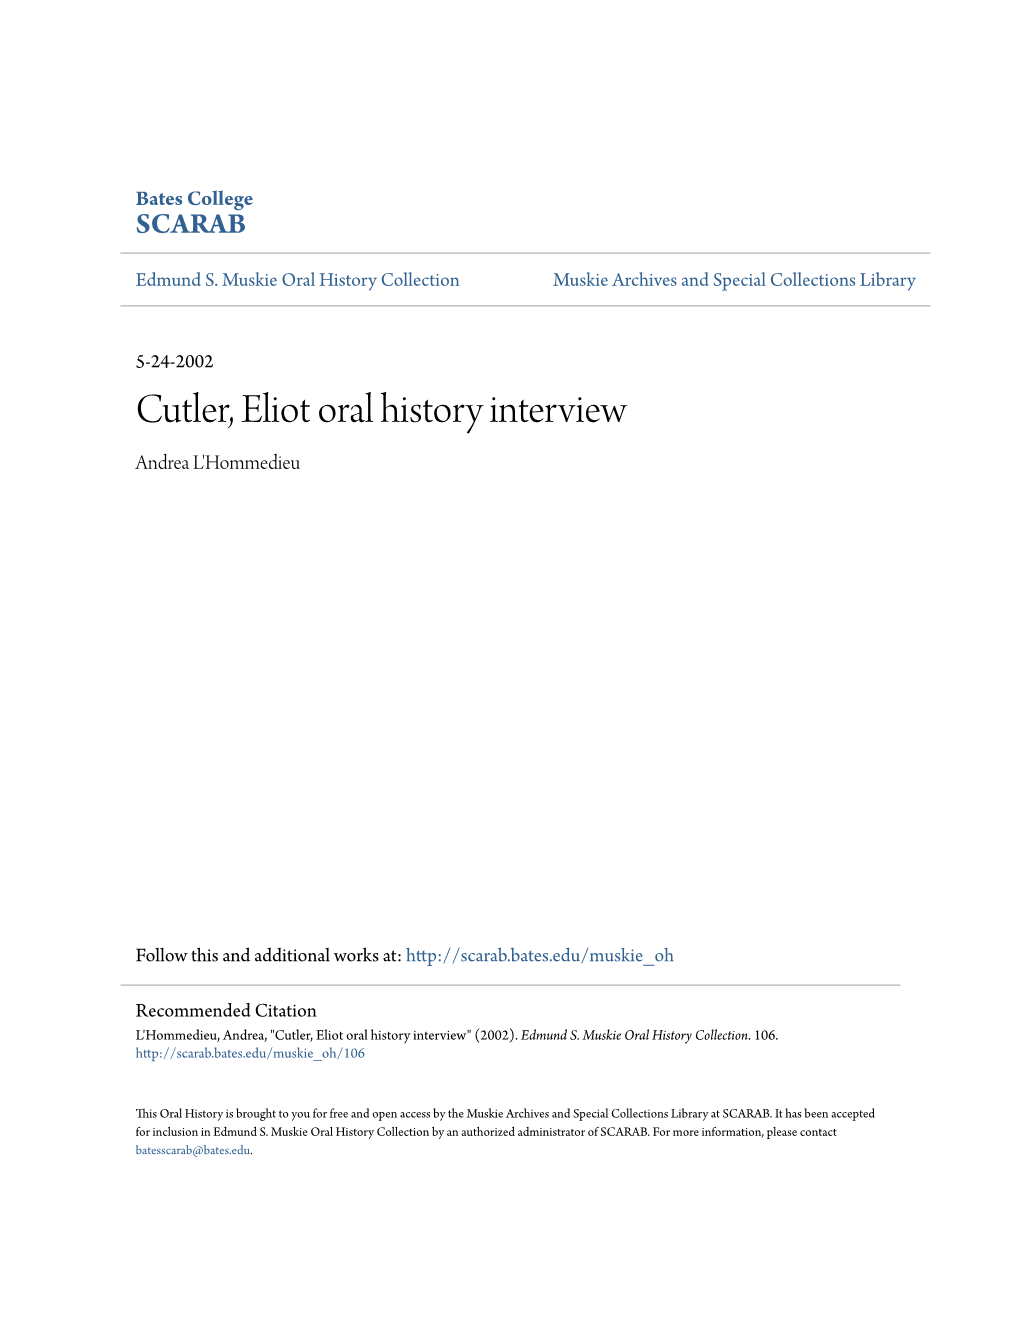 Cutler, Eliot Oral History Interview Andrea L'hommedieu